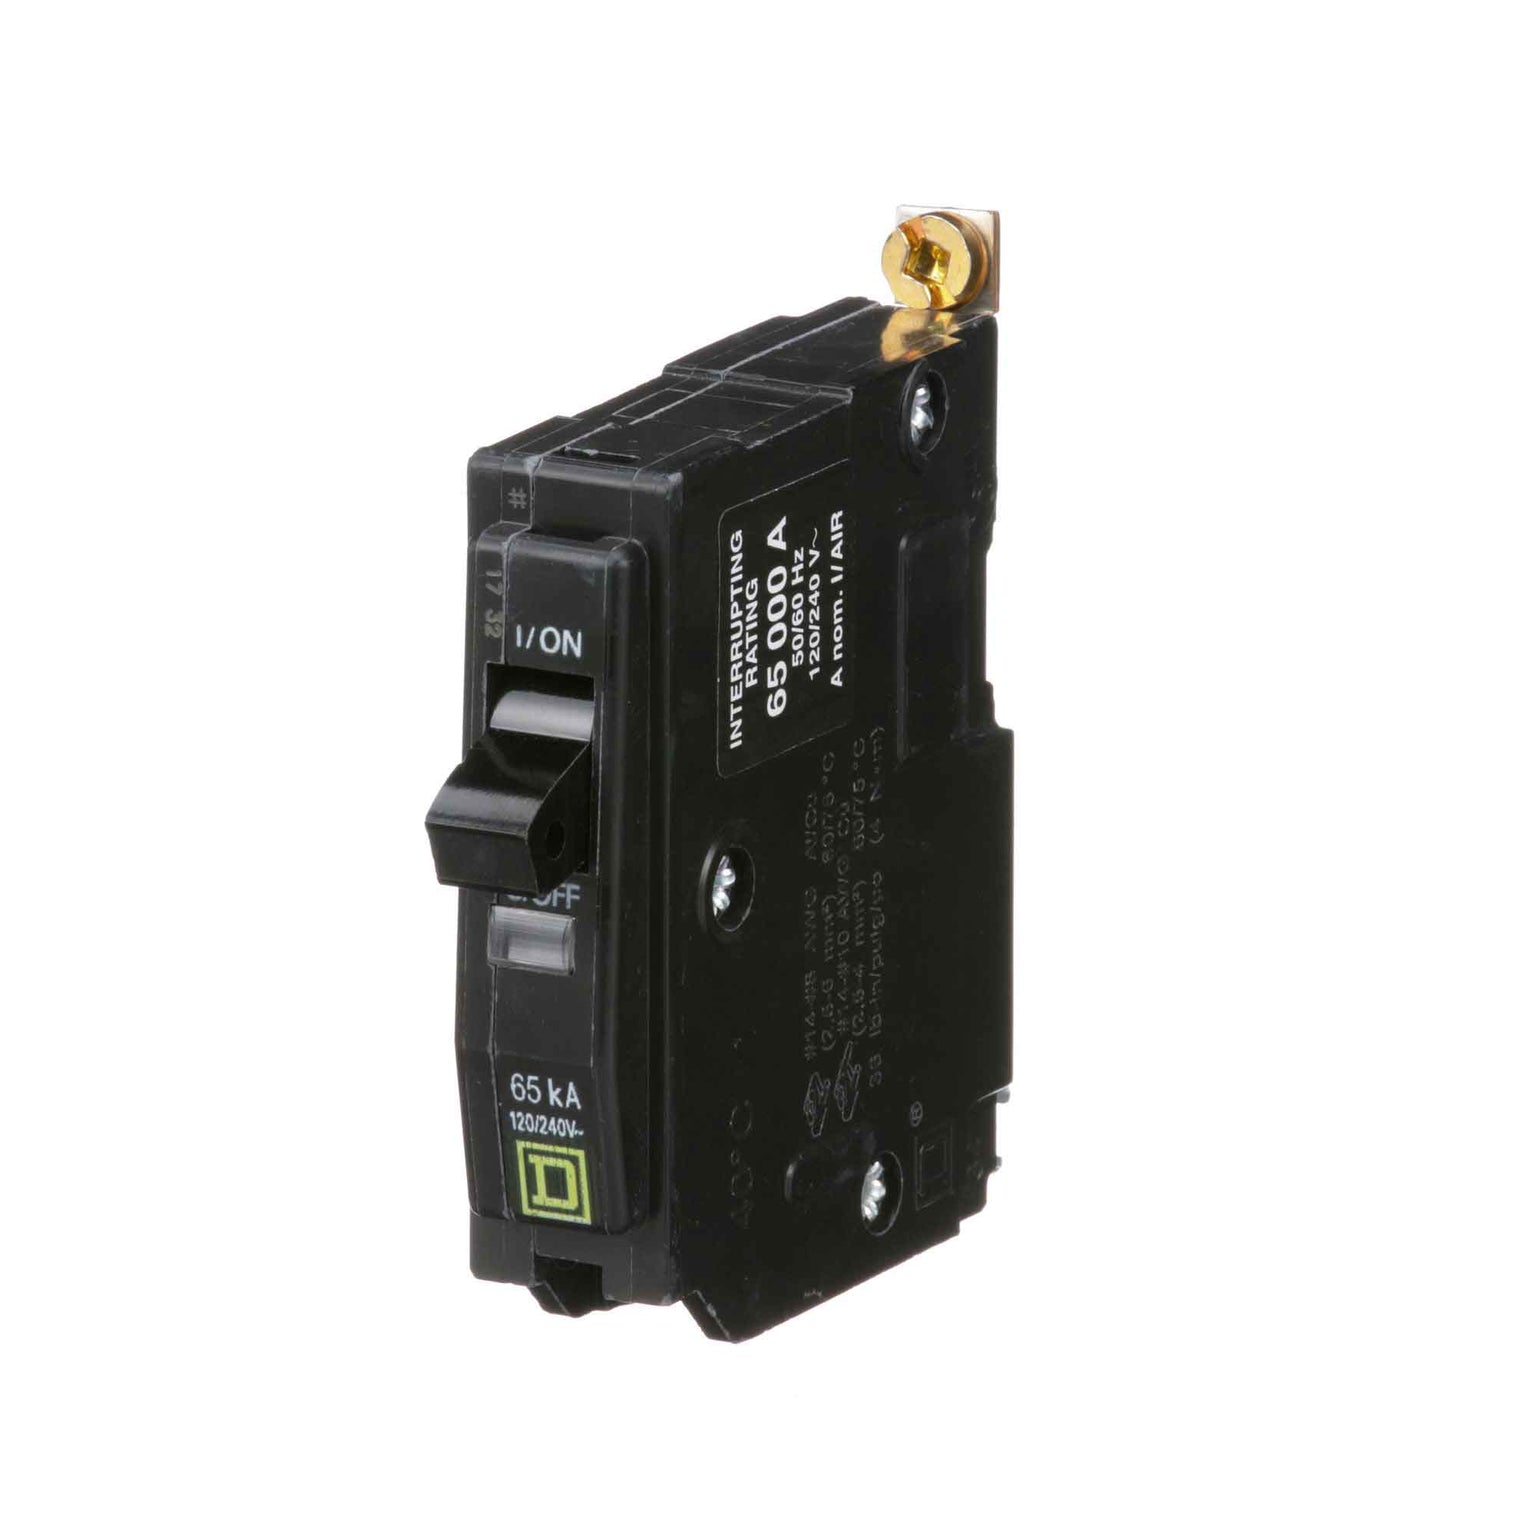 QHB115 - Square D - Molded Case Circuit Breakers